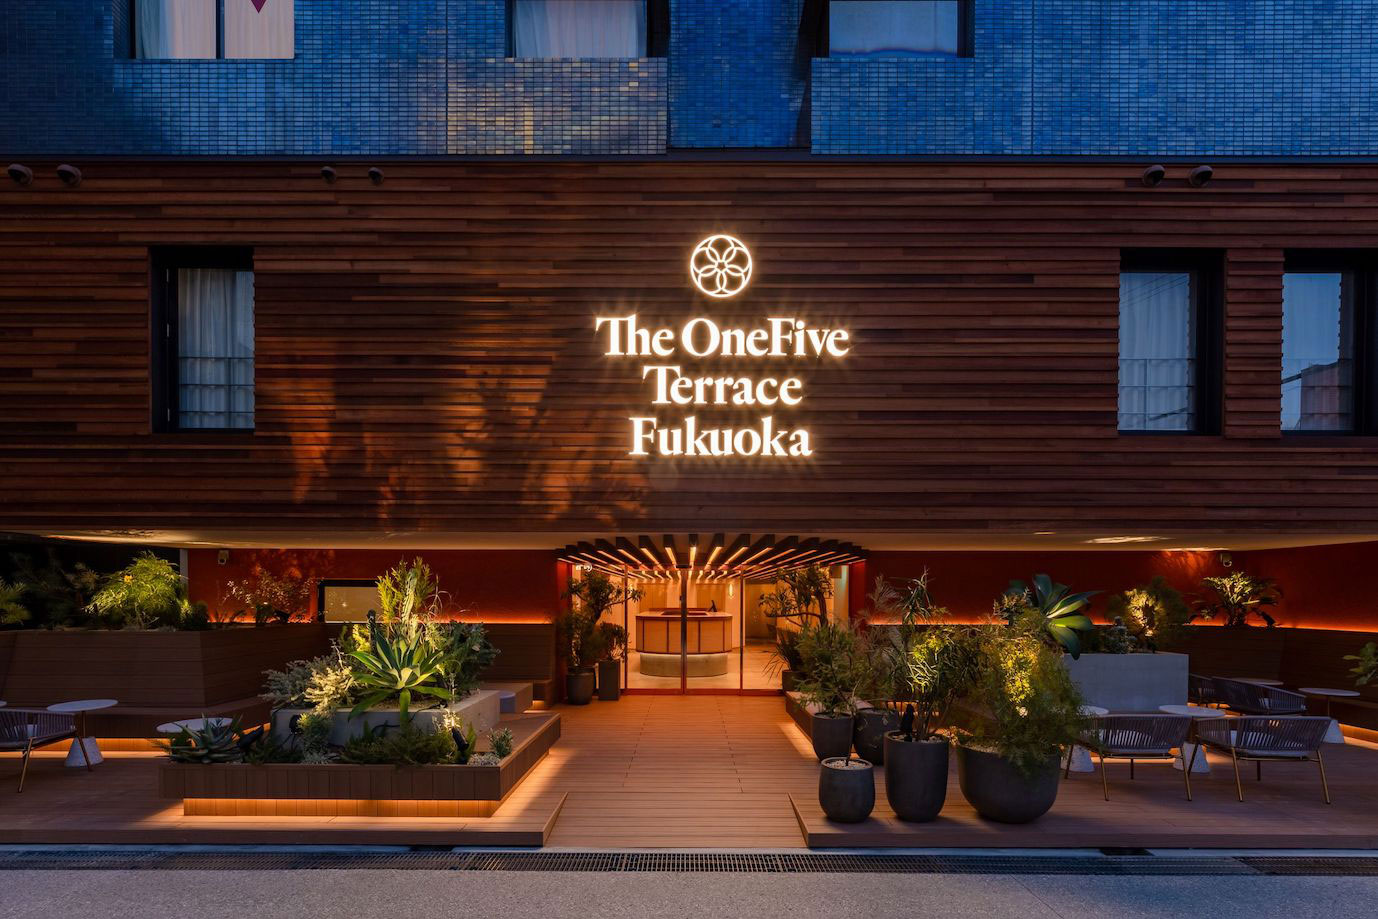 The OneFive Terrace Fukuokaの屋外テラスを備えるエントランス イメージ